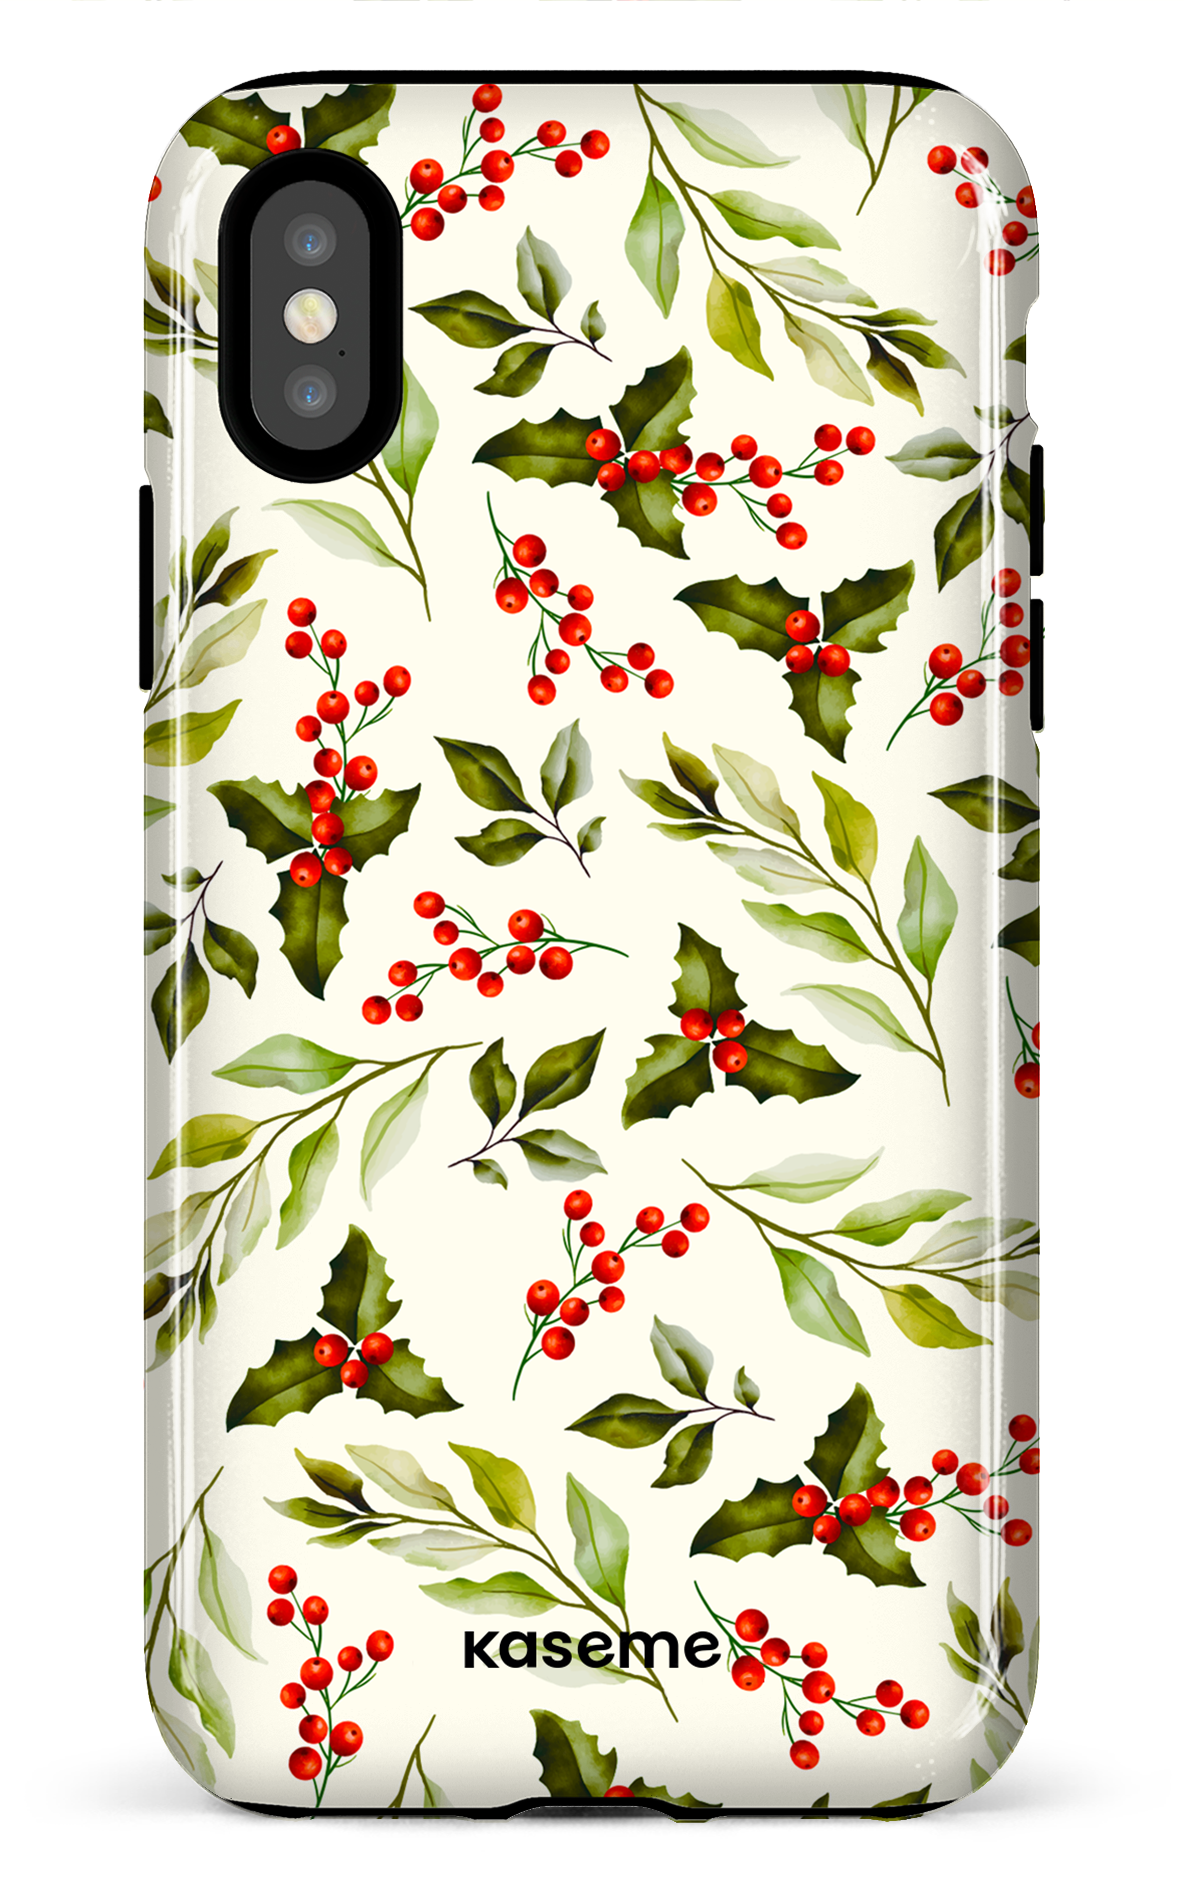 Mistletoe - iPhone X/XS